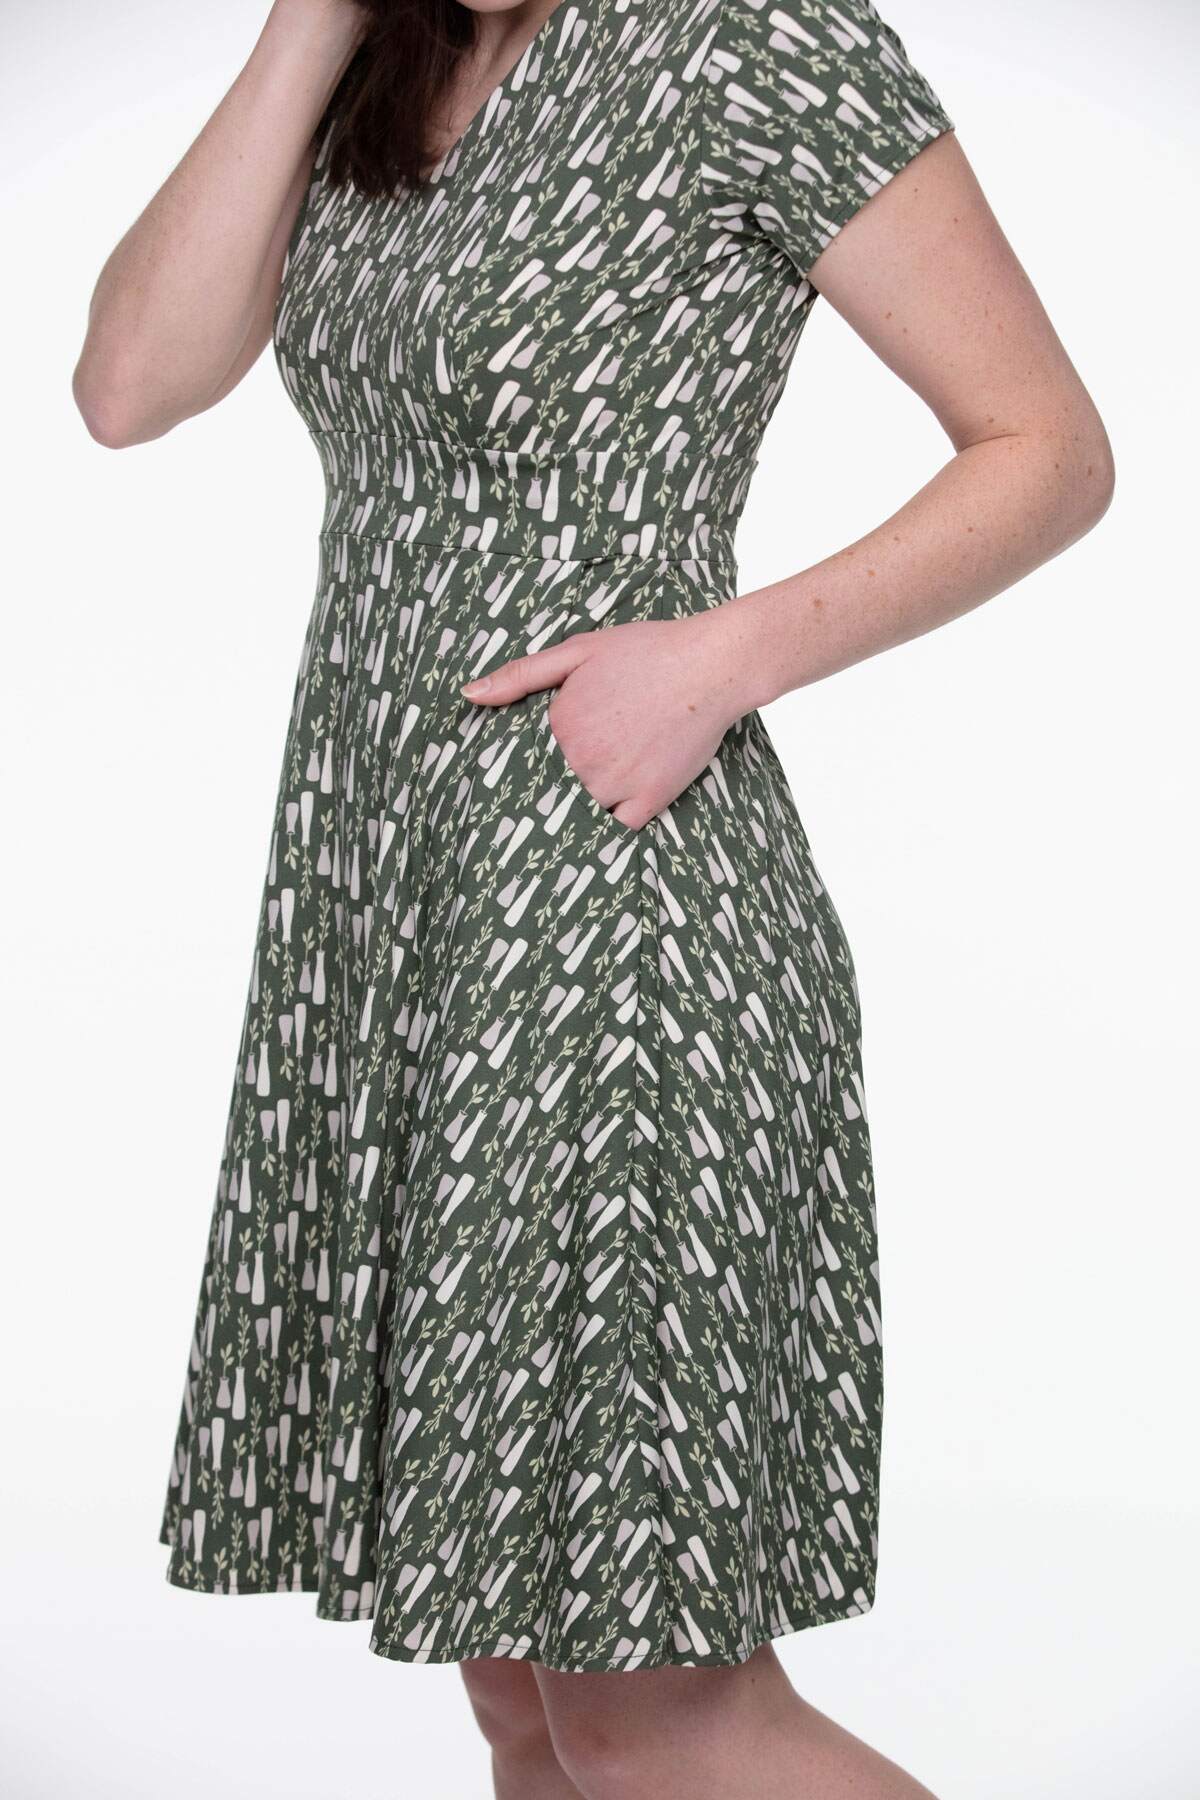 Cece Dress in Sage Sprigs by Karina Dresses